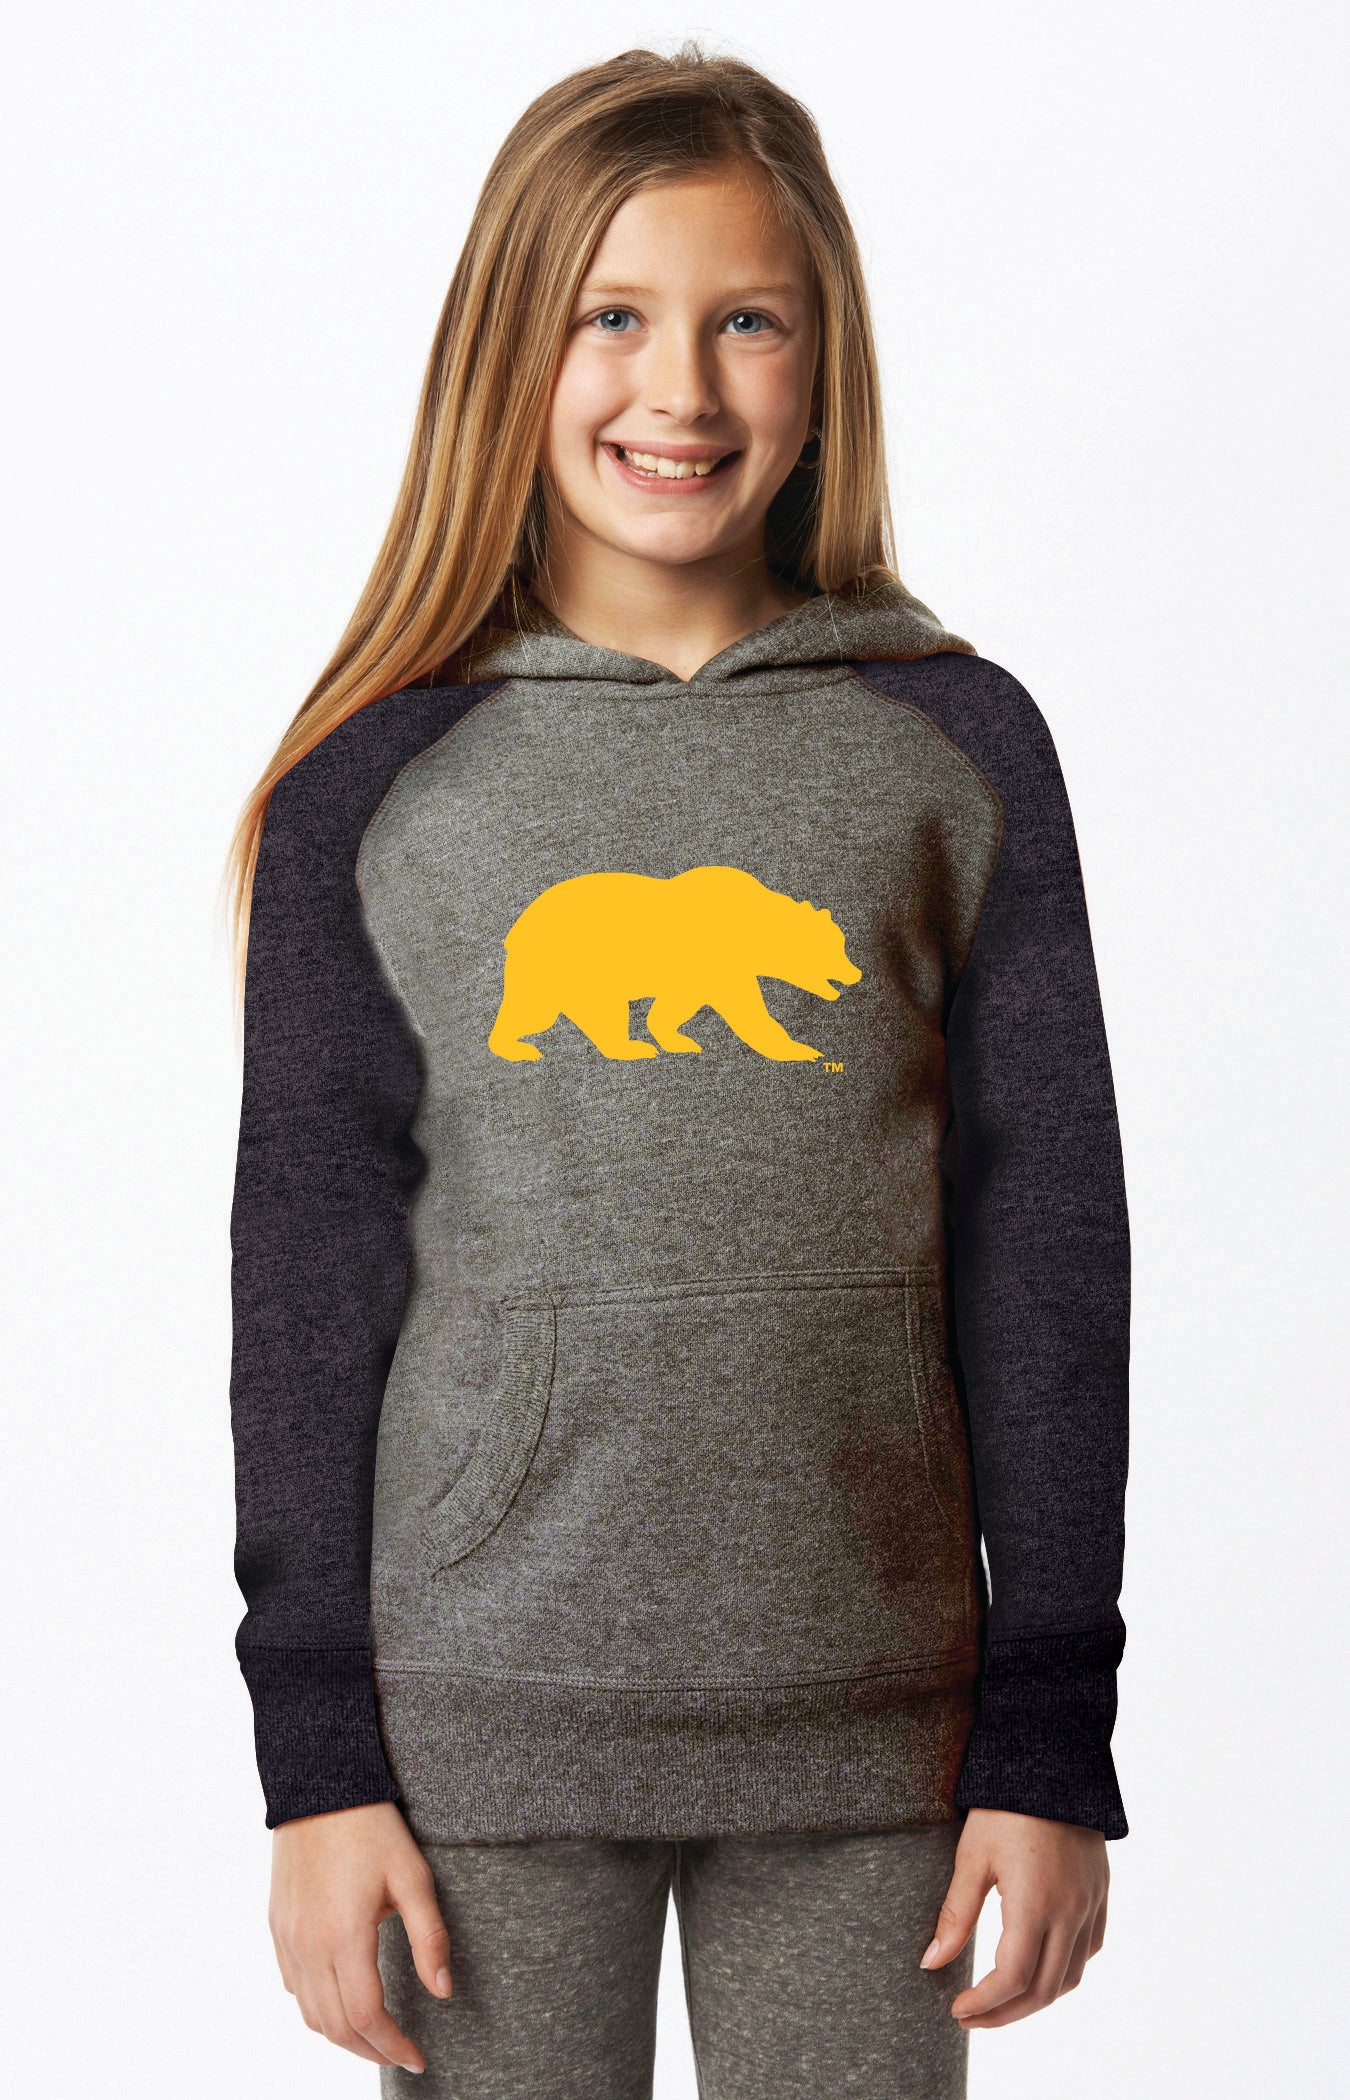 U.C. Berkeley Cal Bears Embroidered Youth Hoodie Sweatshirt Tri Blend-Gray-Shop College Wear